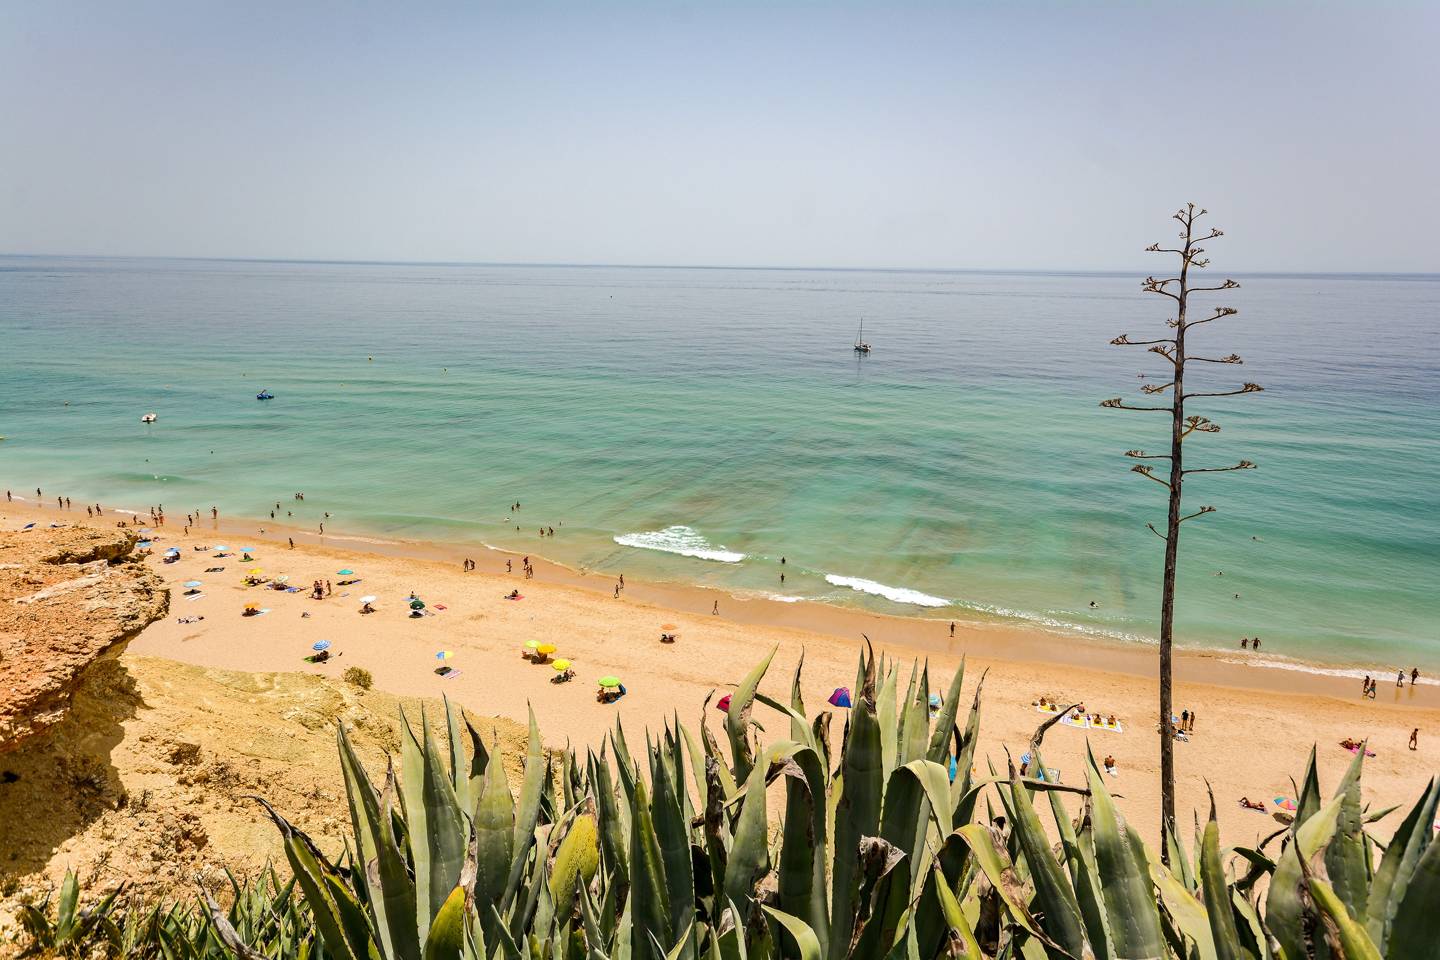 Best beaches in Portugal